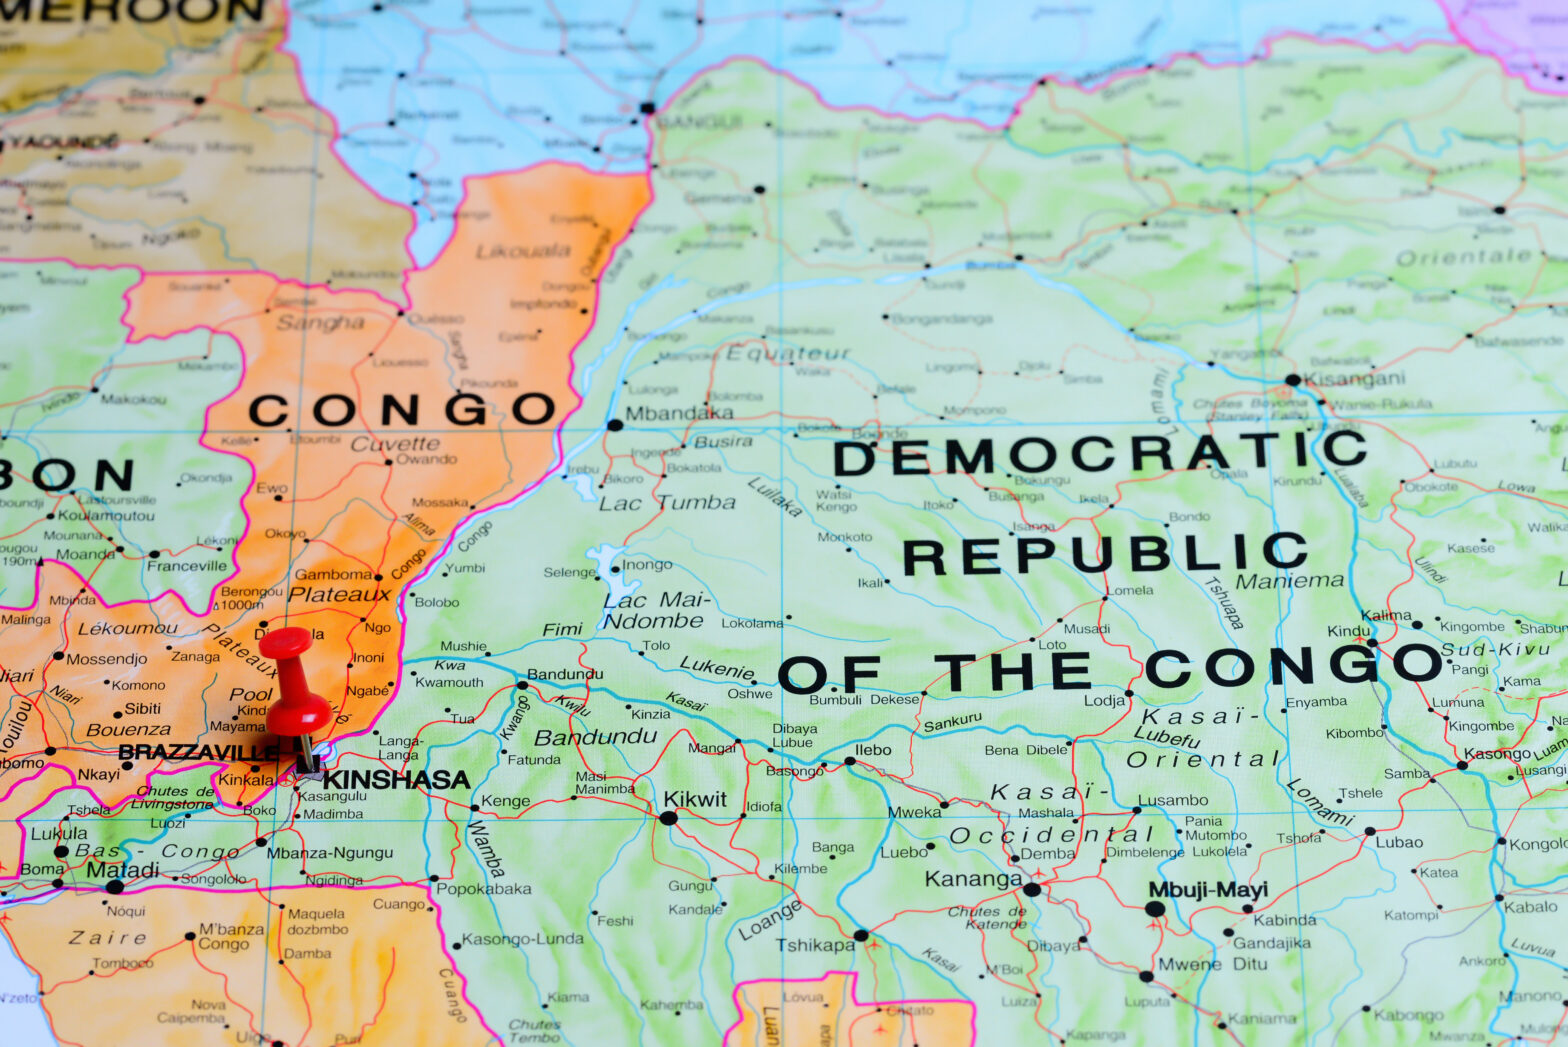 The Crisis in the Democratic Republic of the Congo